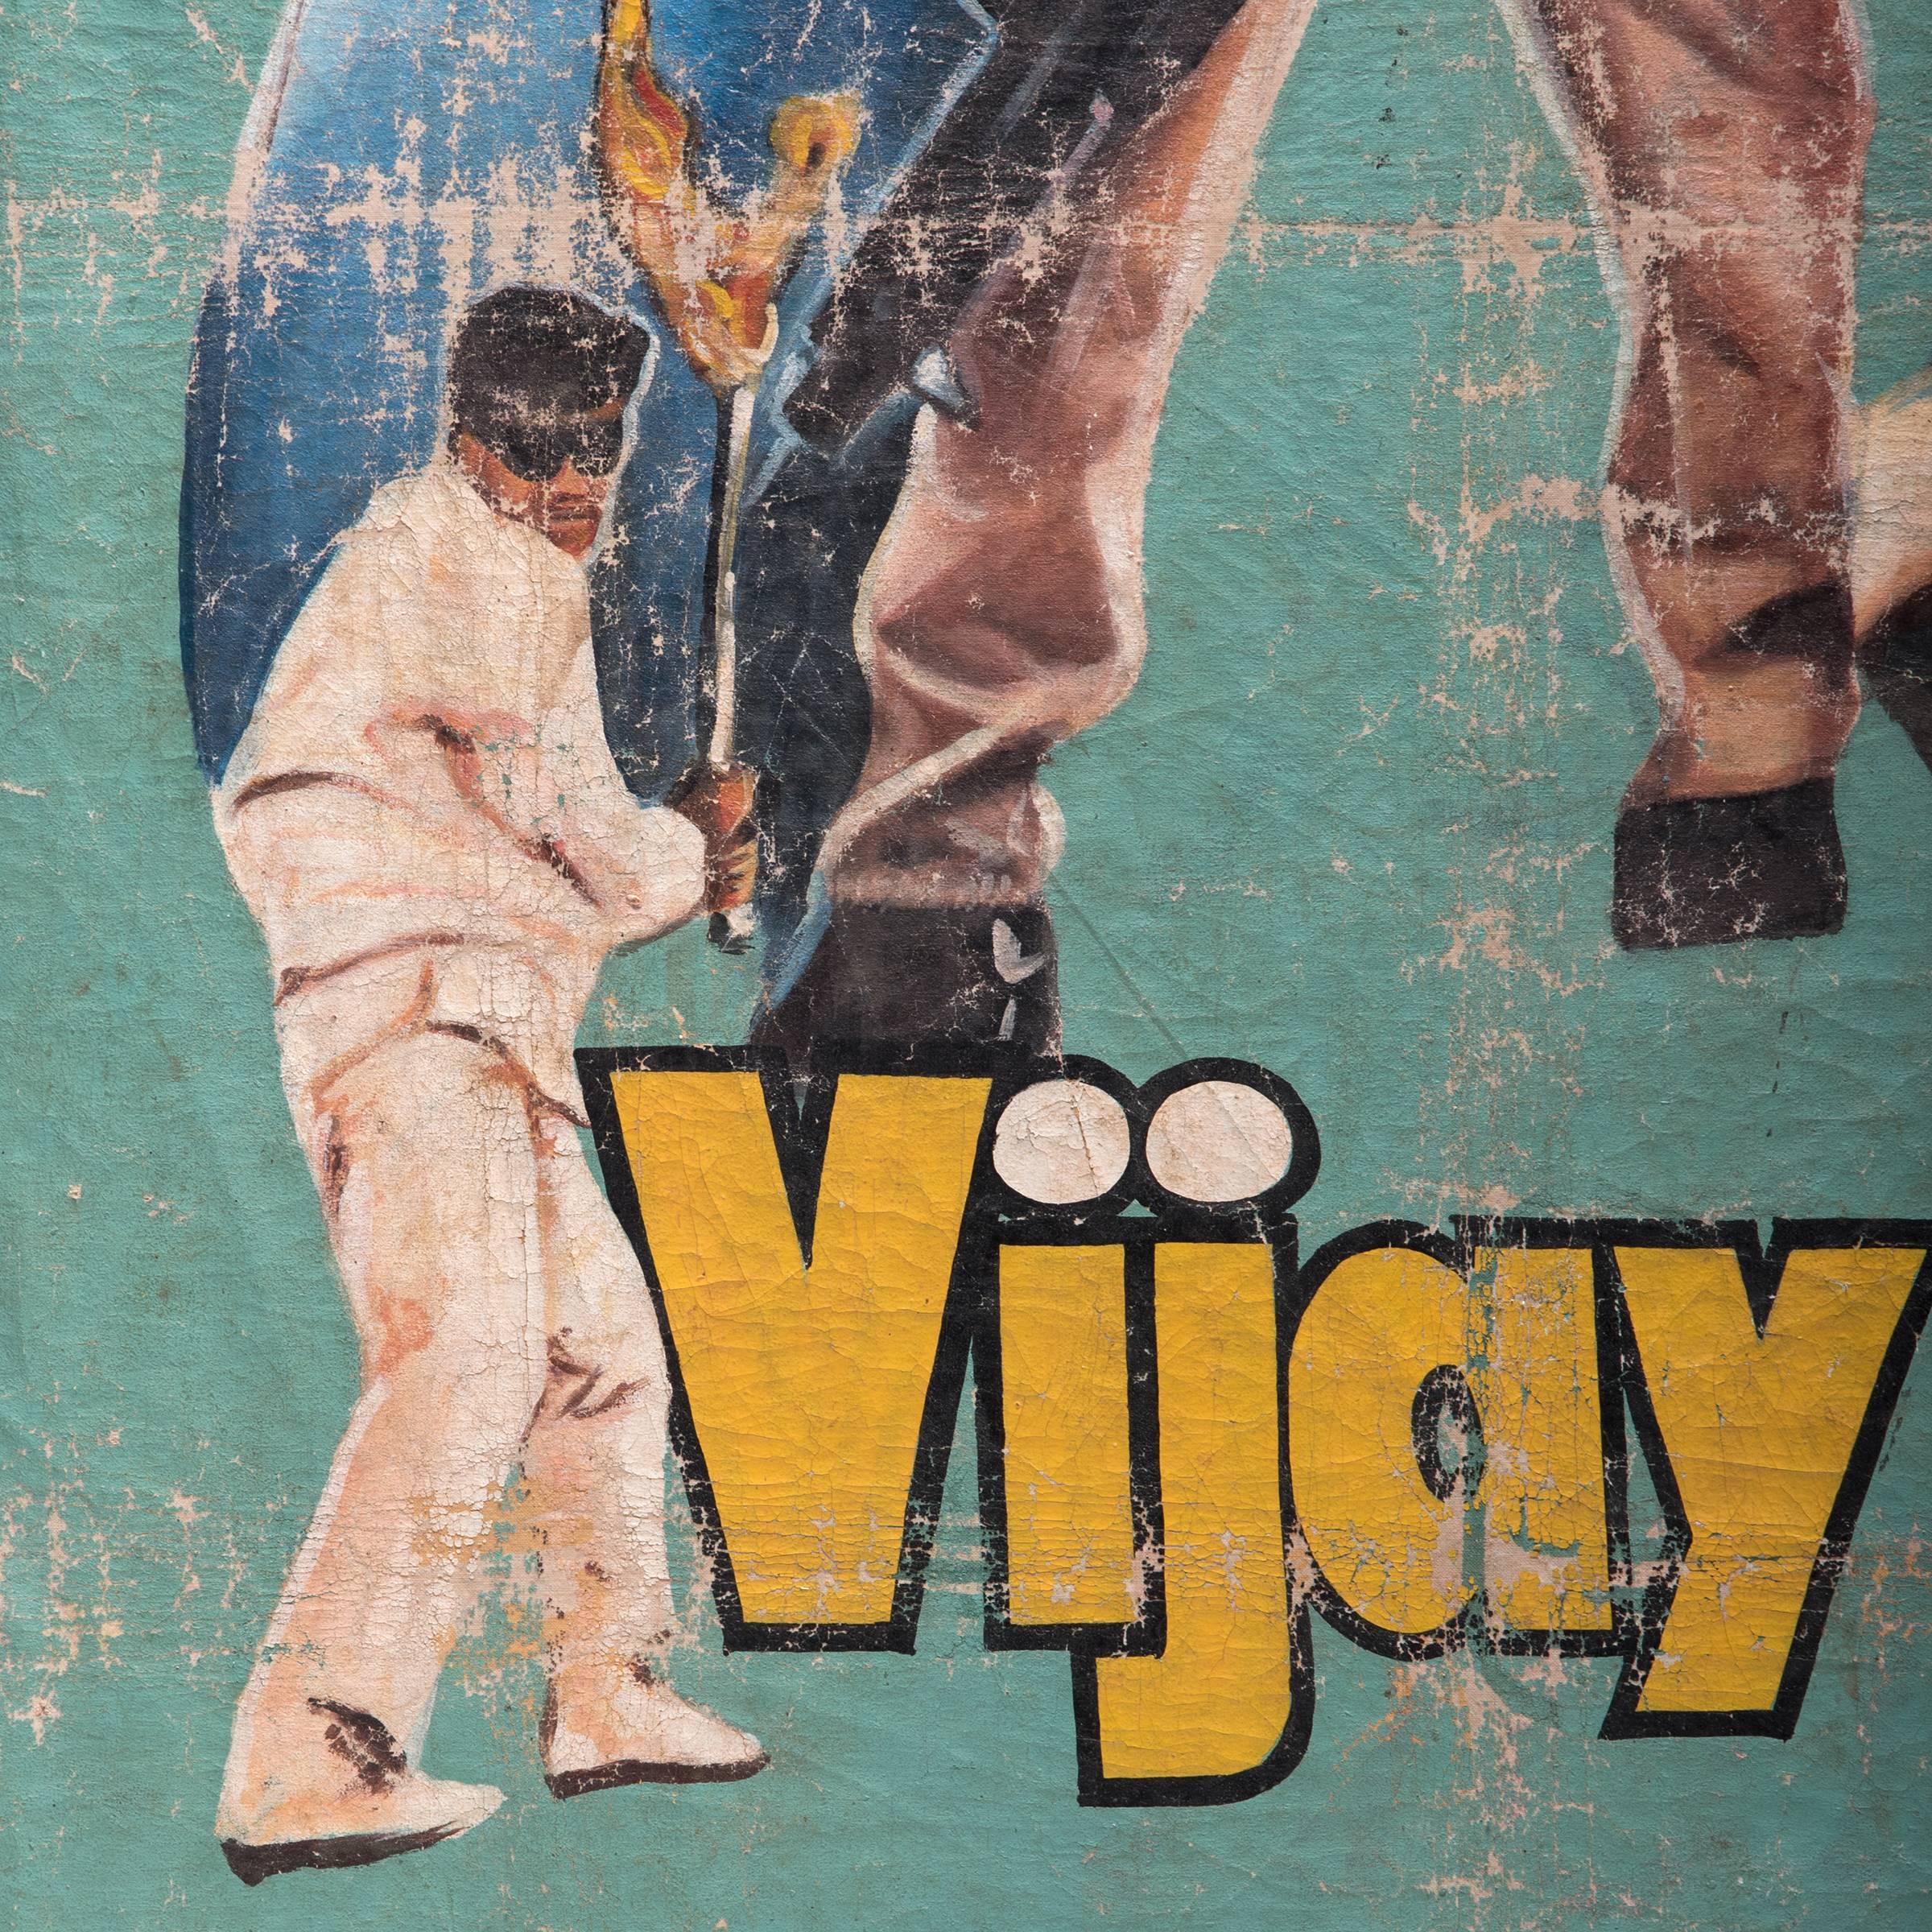 vijaypath poster